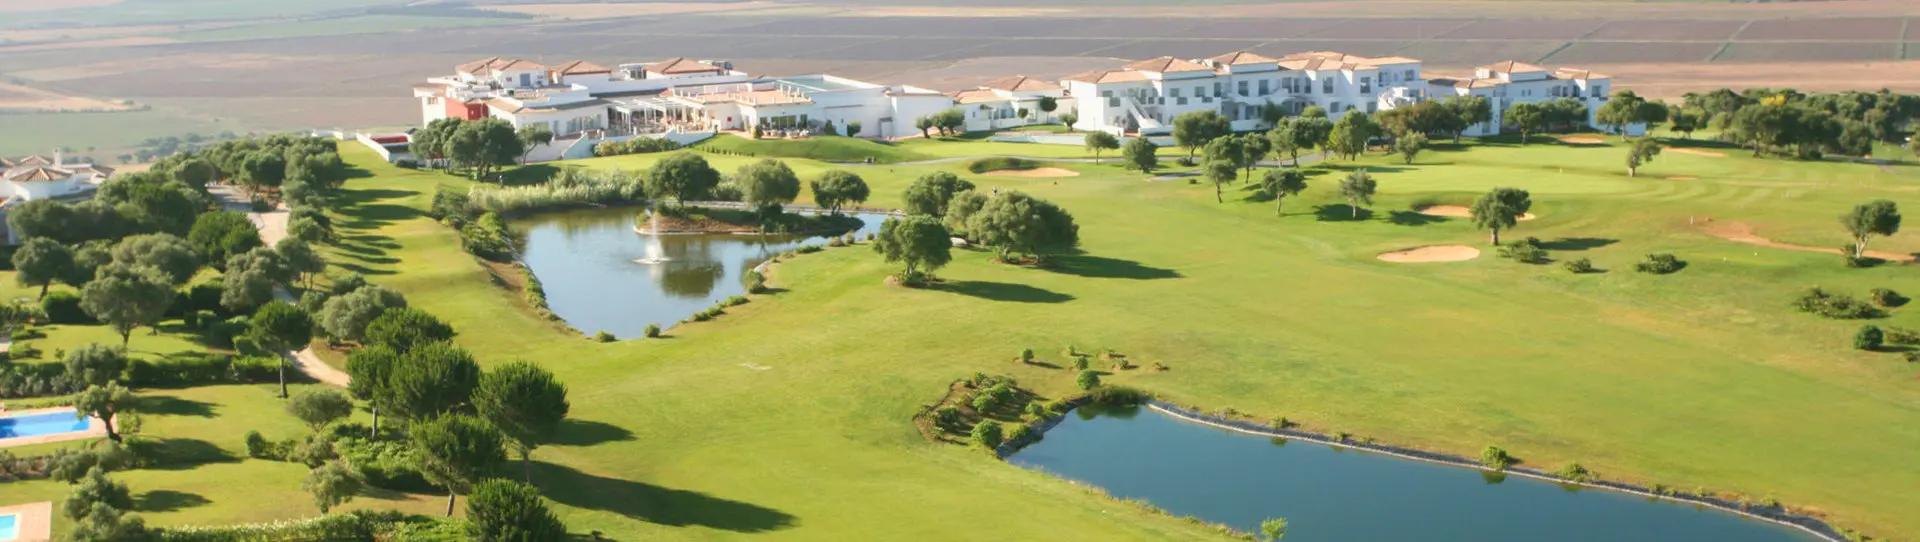 Spain golf holidays - Costa de la Luz 5 Rounds Golf Pack - Photo 2